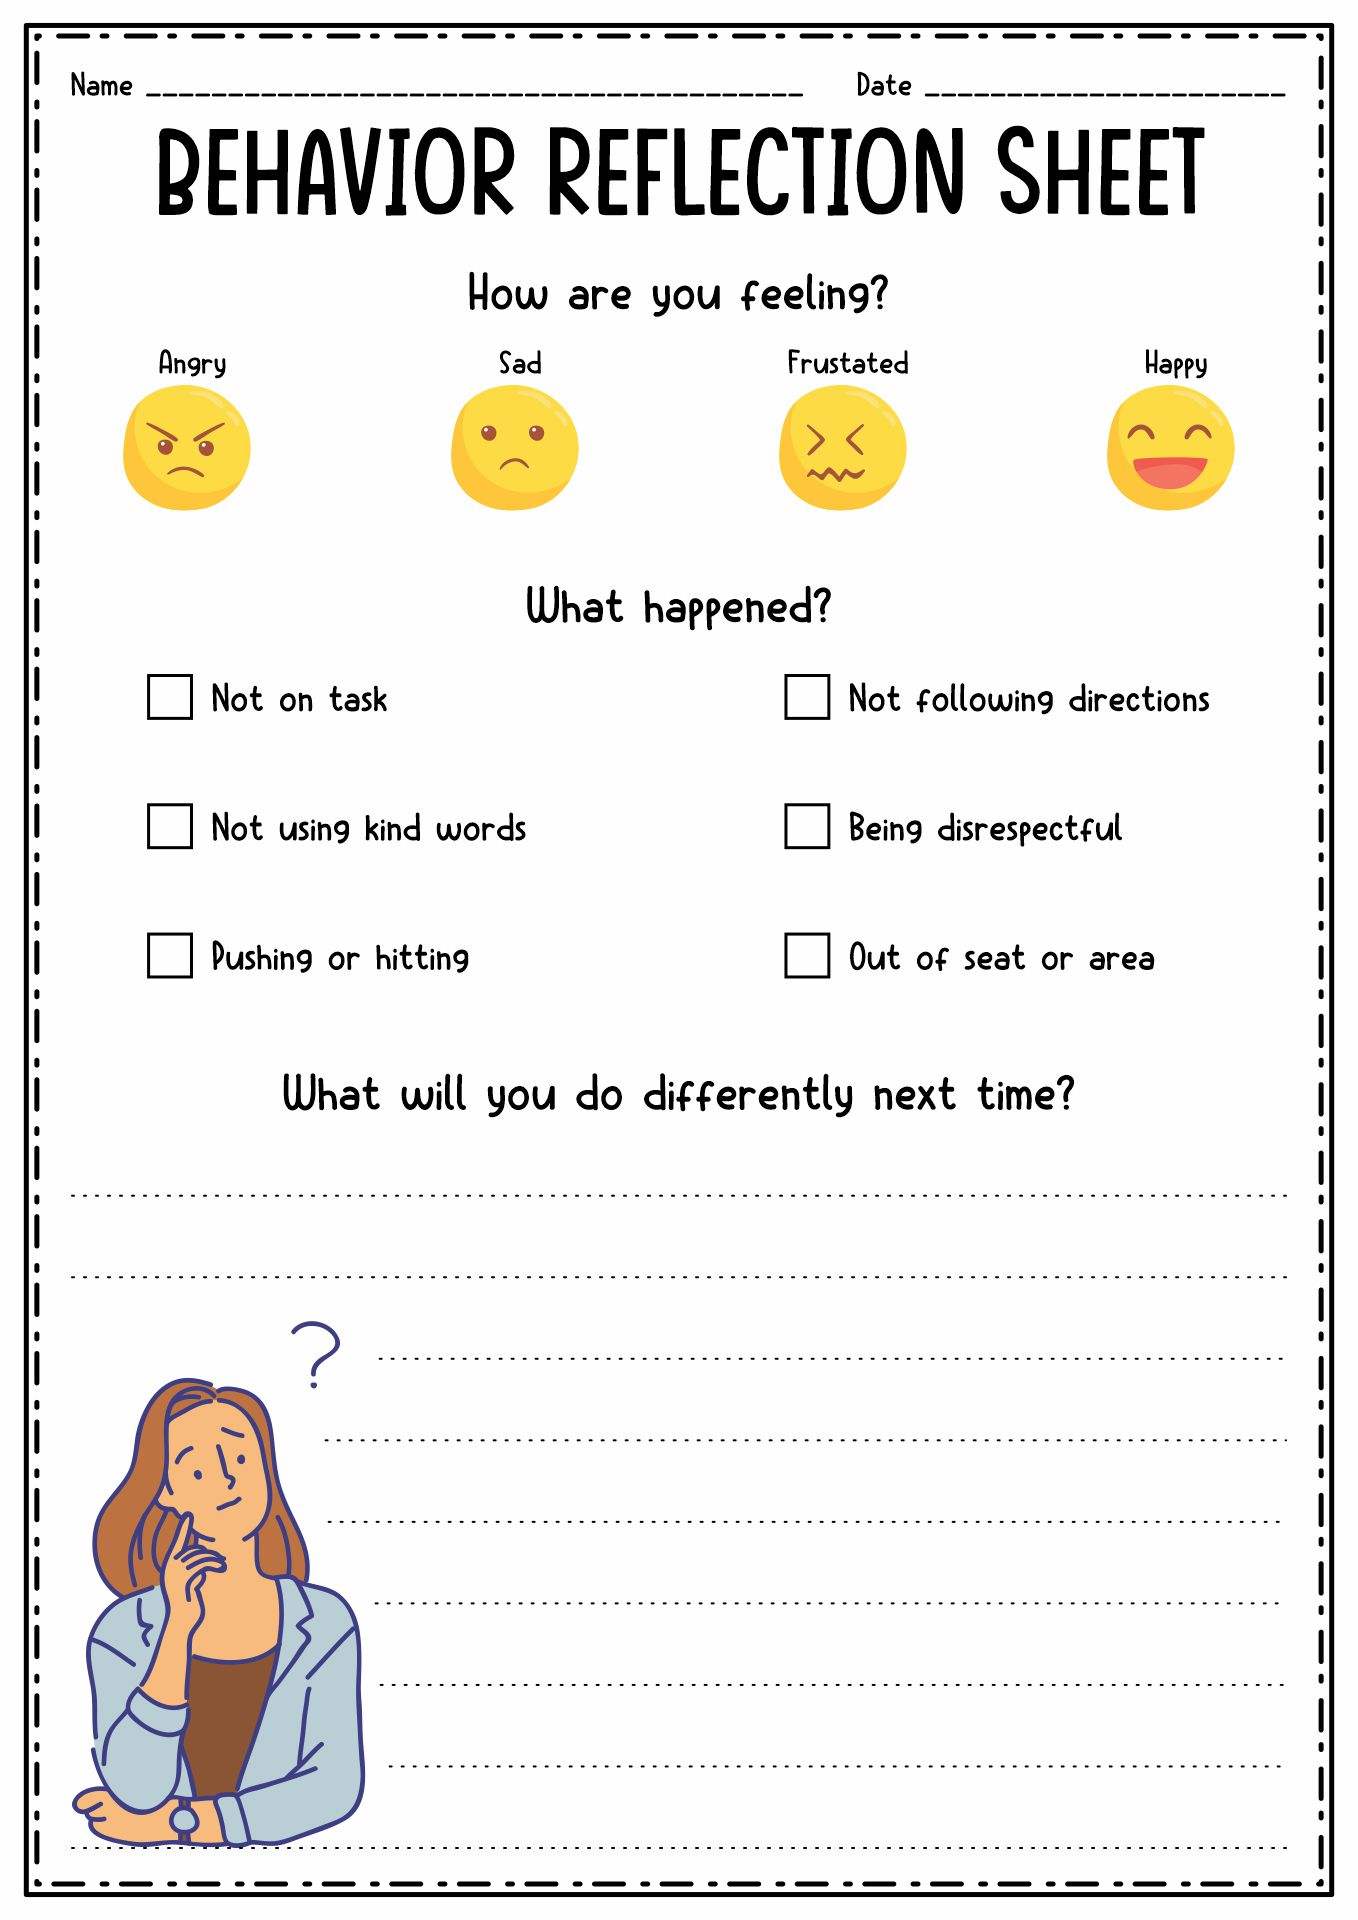 Student Behavior Reflection Sheet Elementary Image